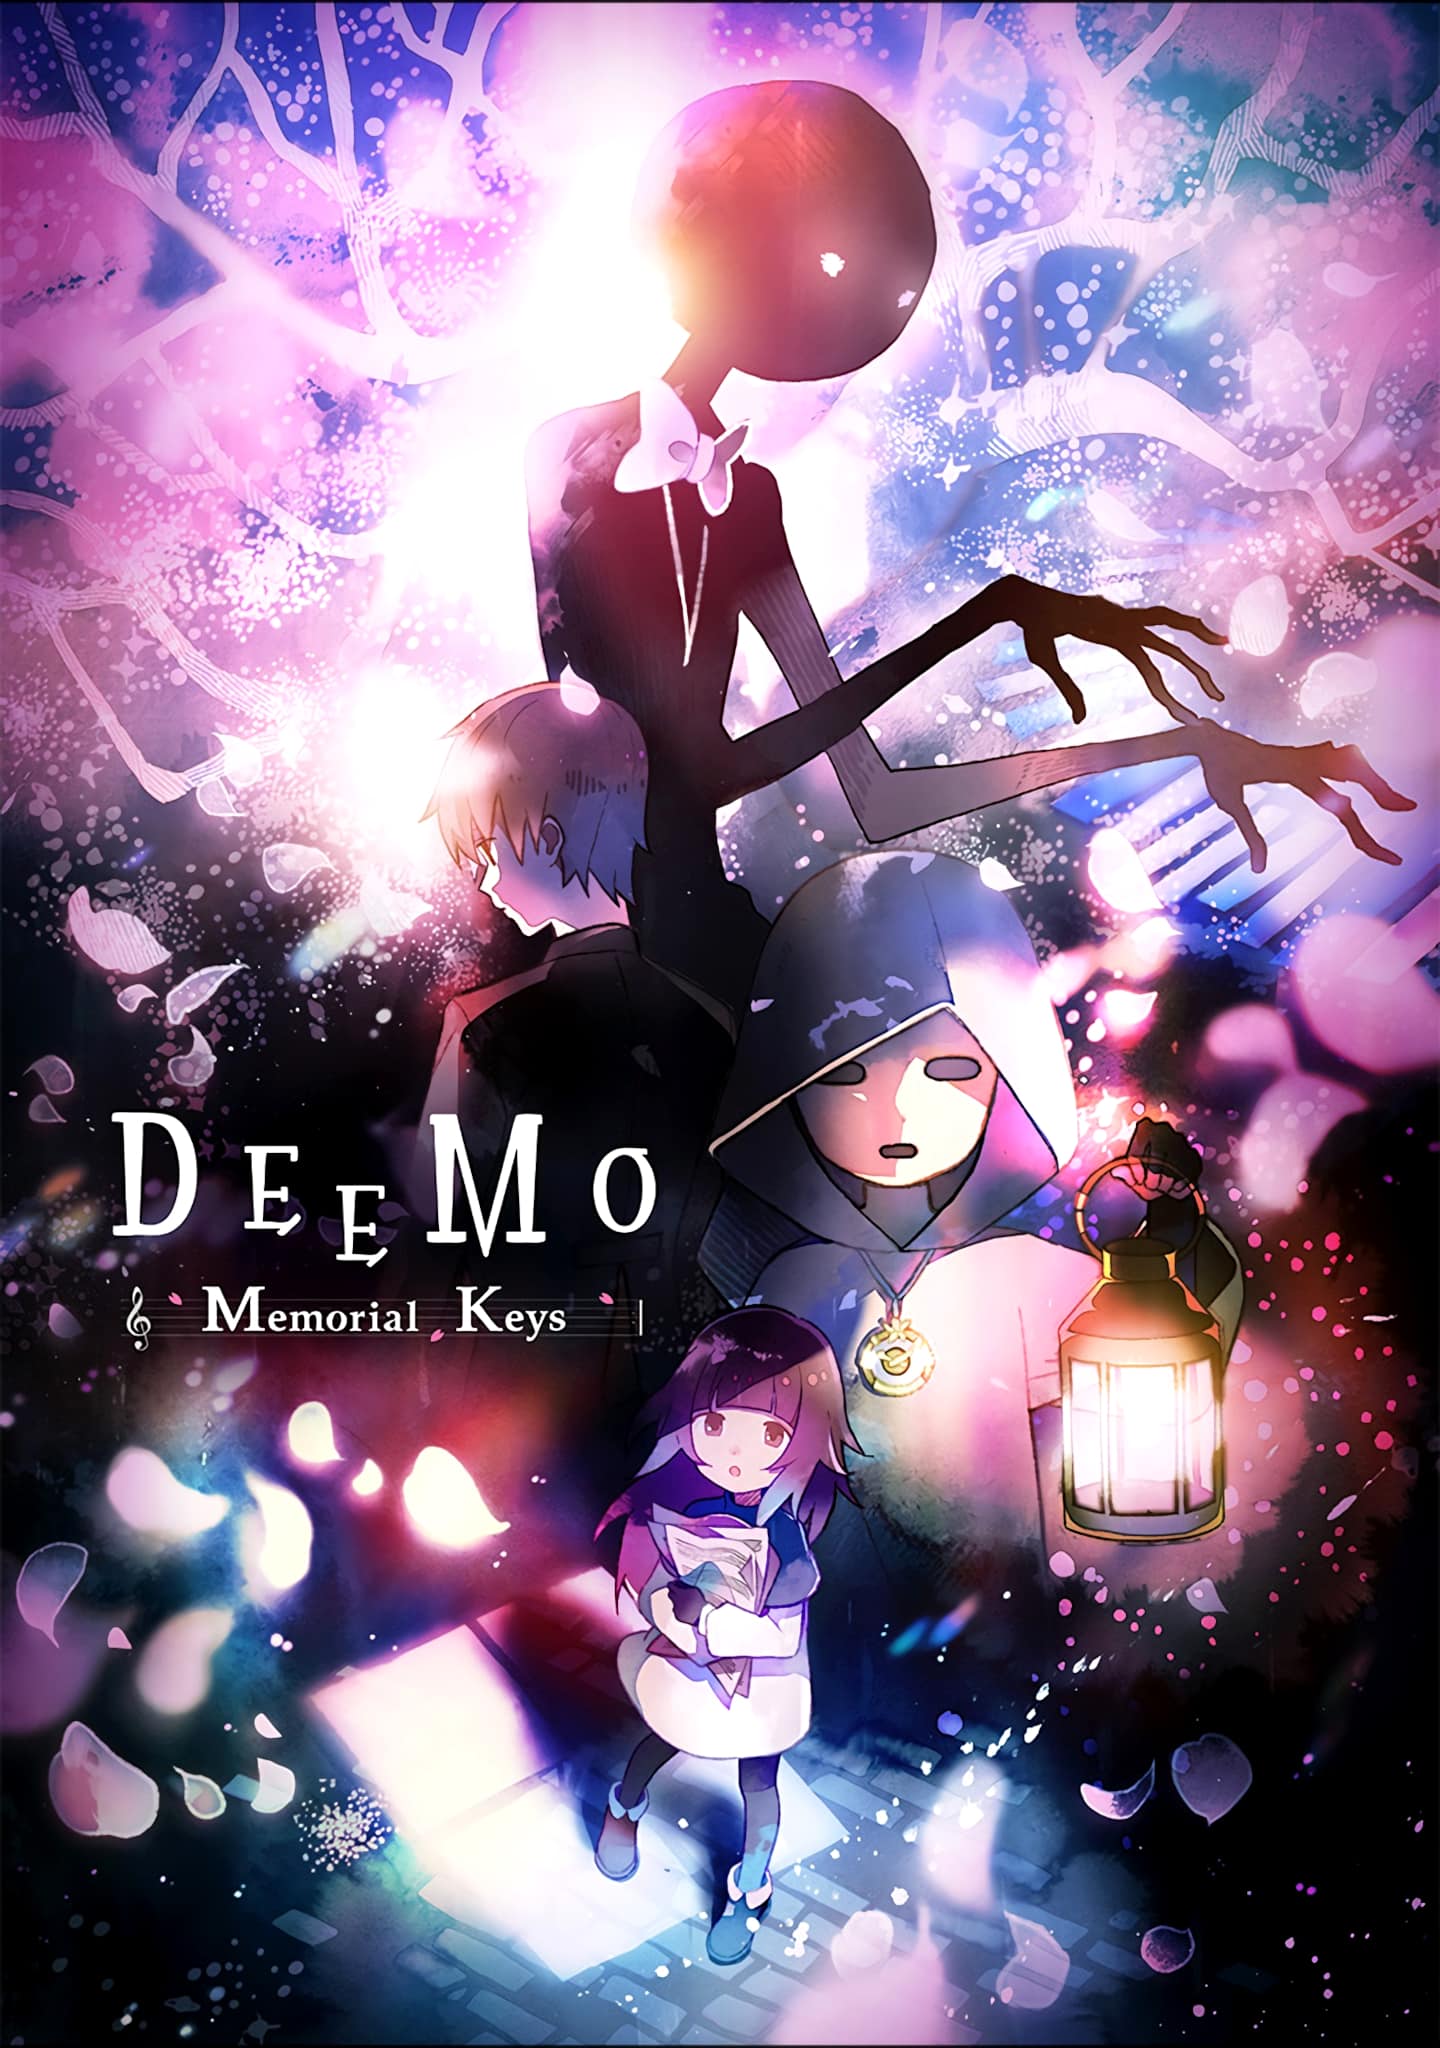 Annonce de la date de sortie du film DEEMO : Memorial Keys